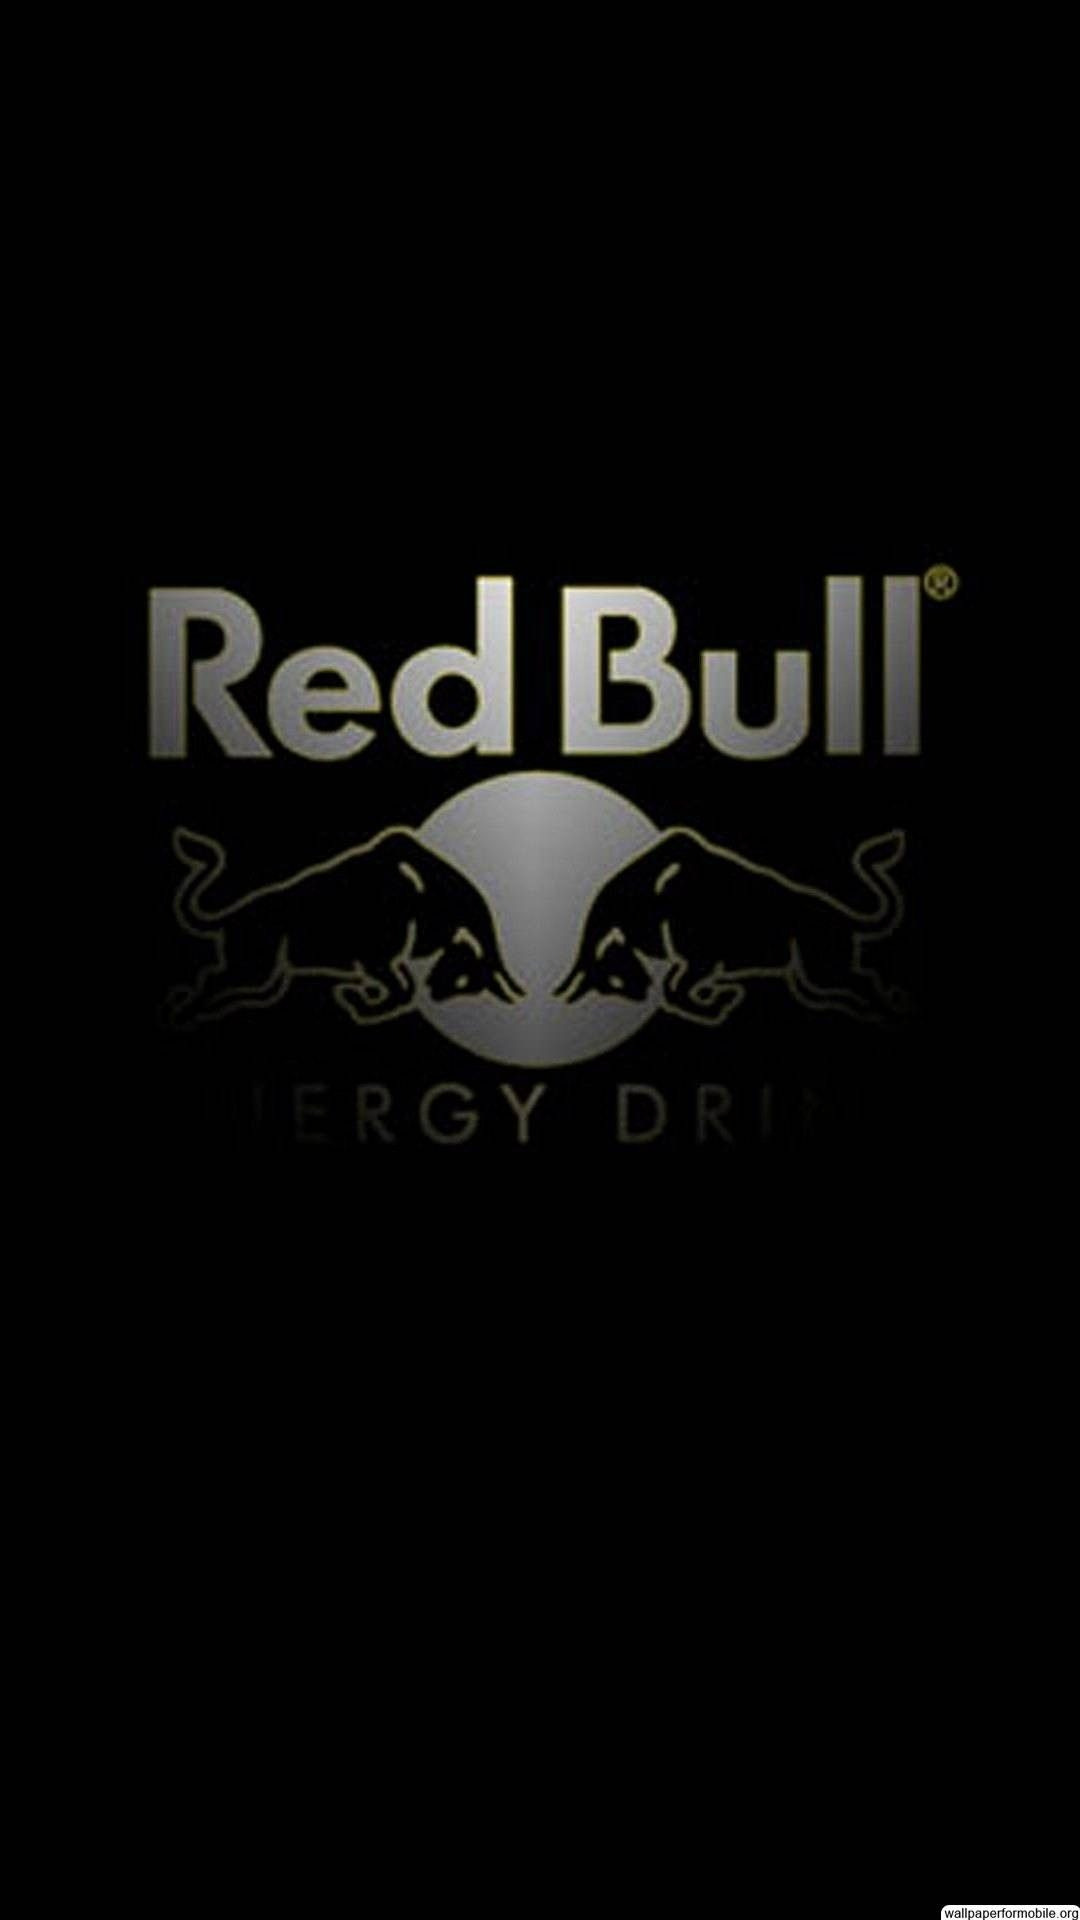 1080x1920 Wallpaper Red Bull Para Iphone Download New Wallpaper Red Bull Para Iphonefor iPhone Wallpap&acirc;&#128;&brvbar; | Fond d'&Atilde;&copy;cran t&Atilde;&copy;l&Atilde;&copy;phone, Fond d'ecran dessin, Fond iphone